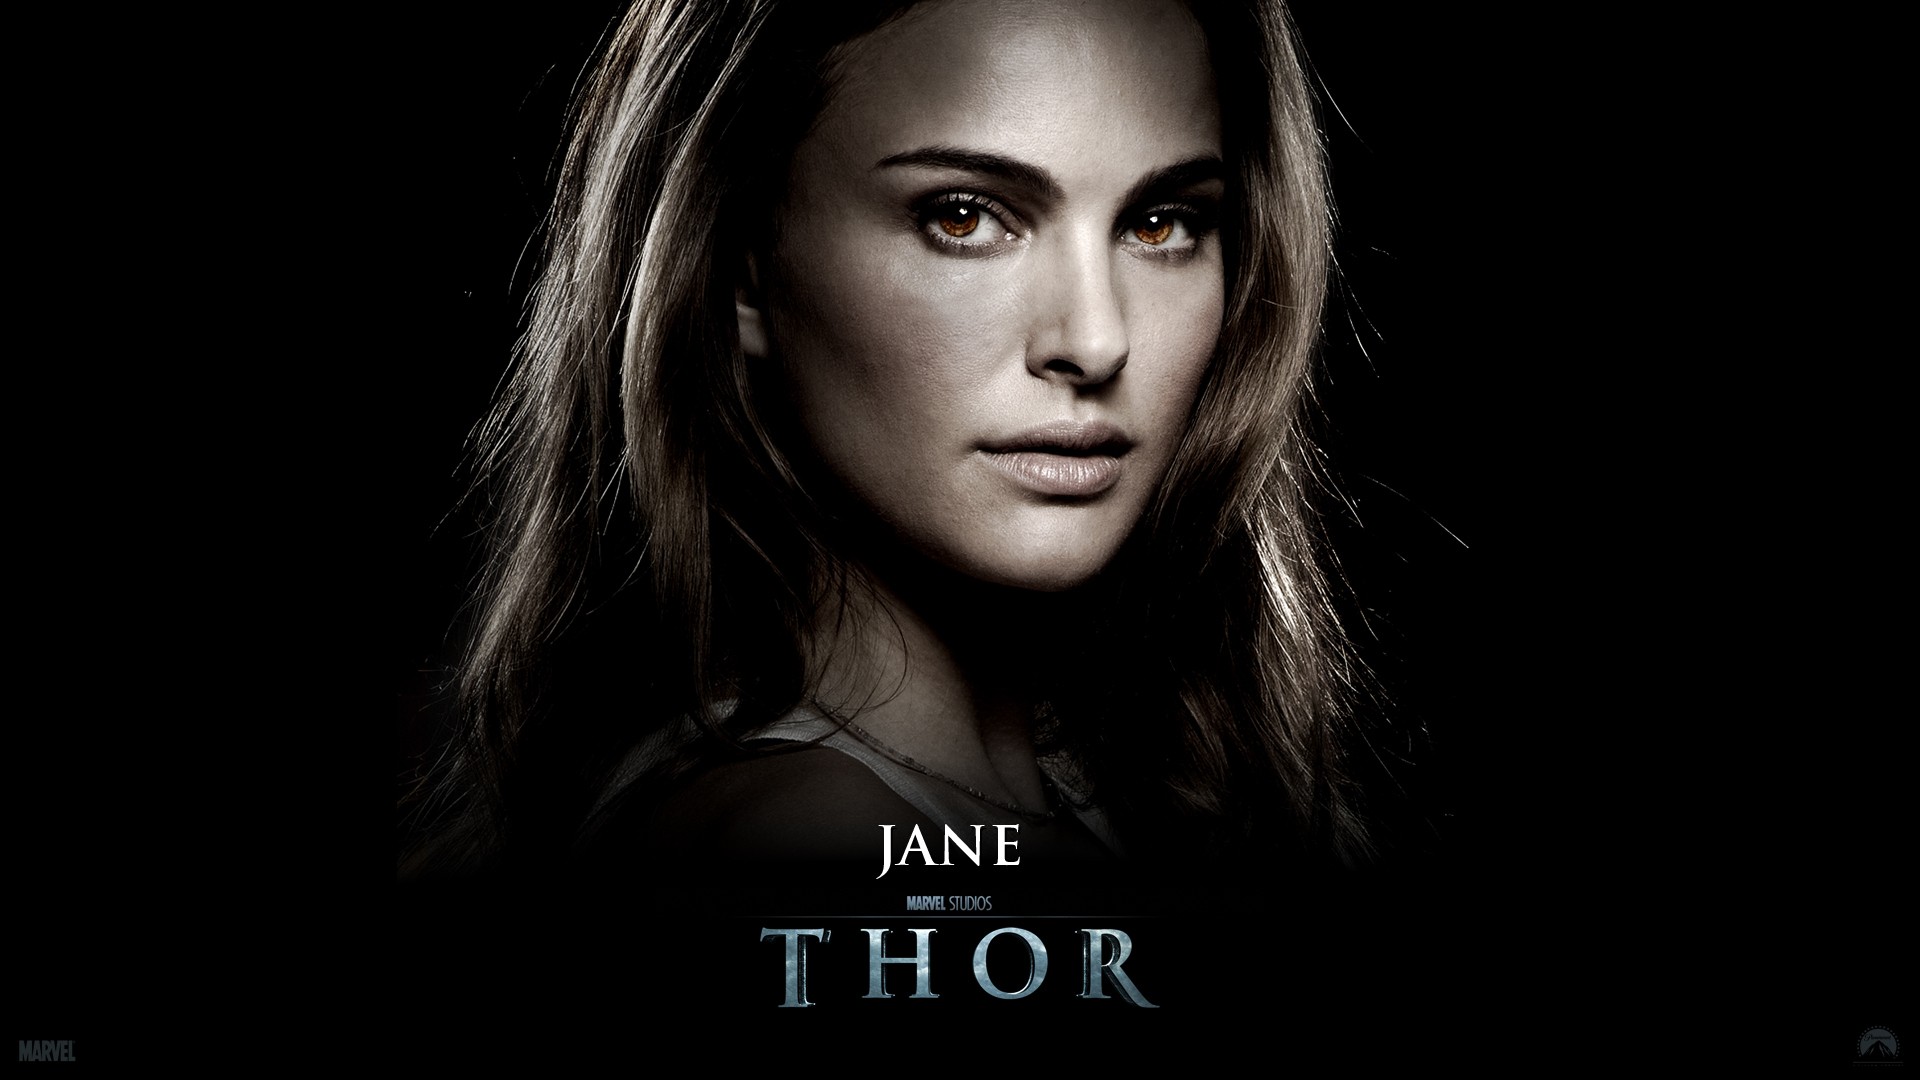 People 1920x1080 movies Thor Natalie Portman Marvel Cinematic Universe movie poster Jane Foster women